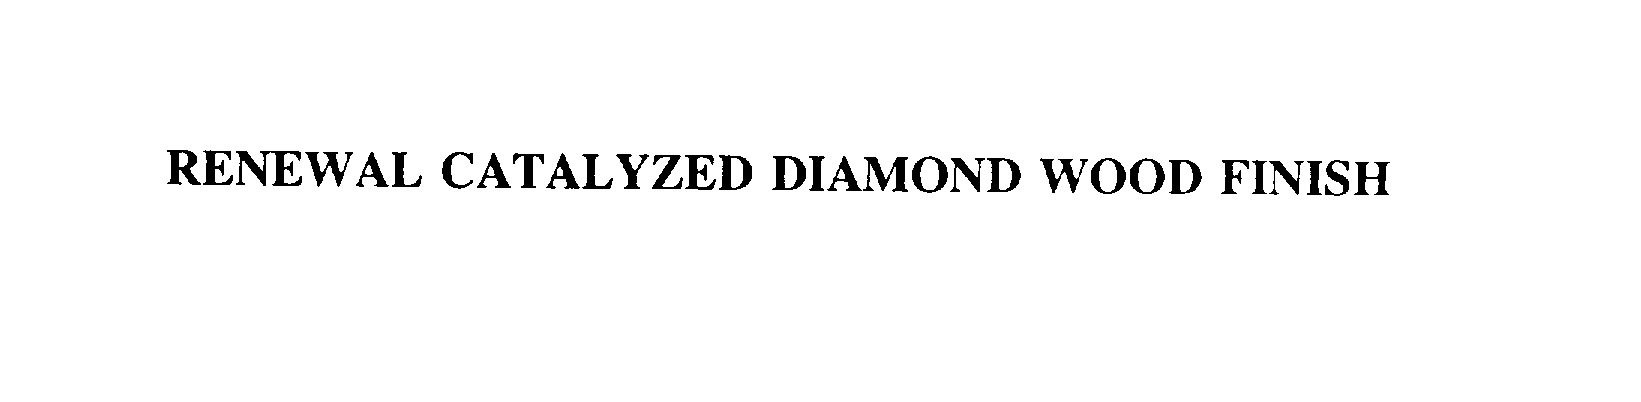  RENEWAL CATALYZED DIAMOND WOOD FINISH